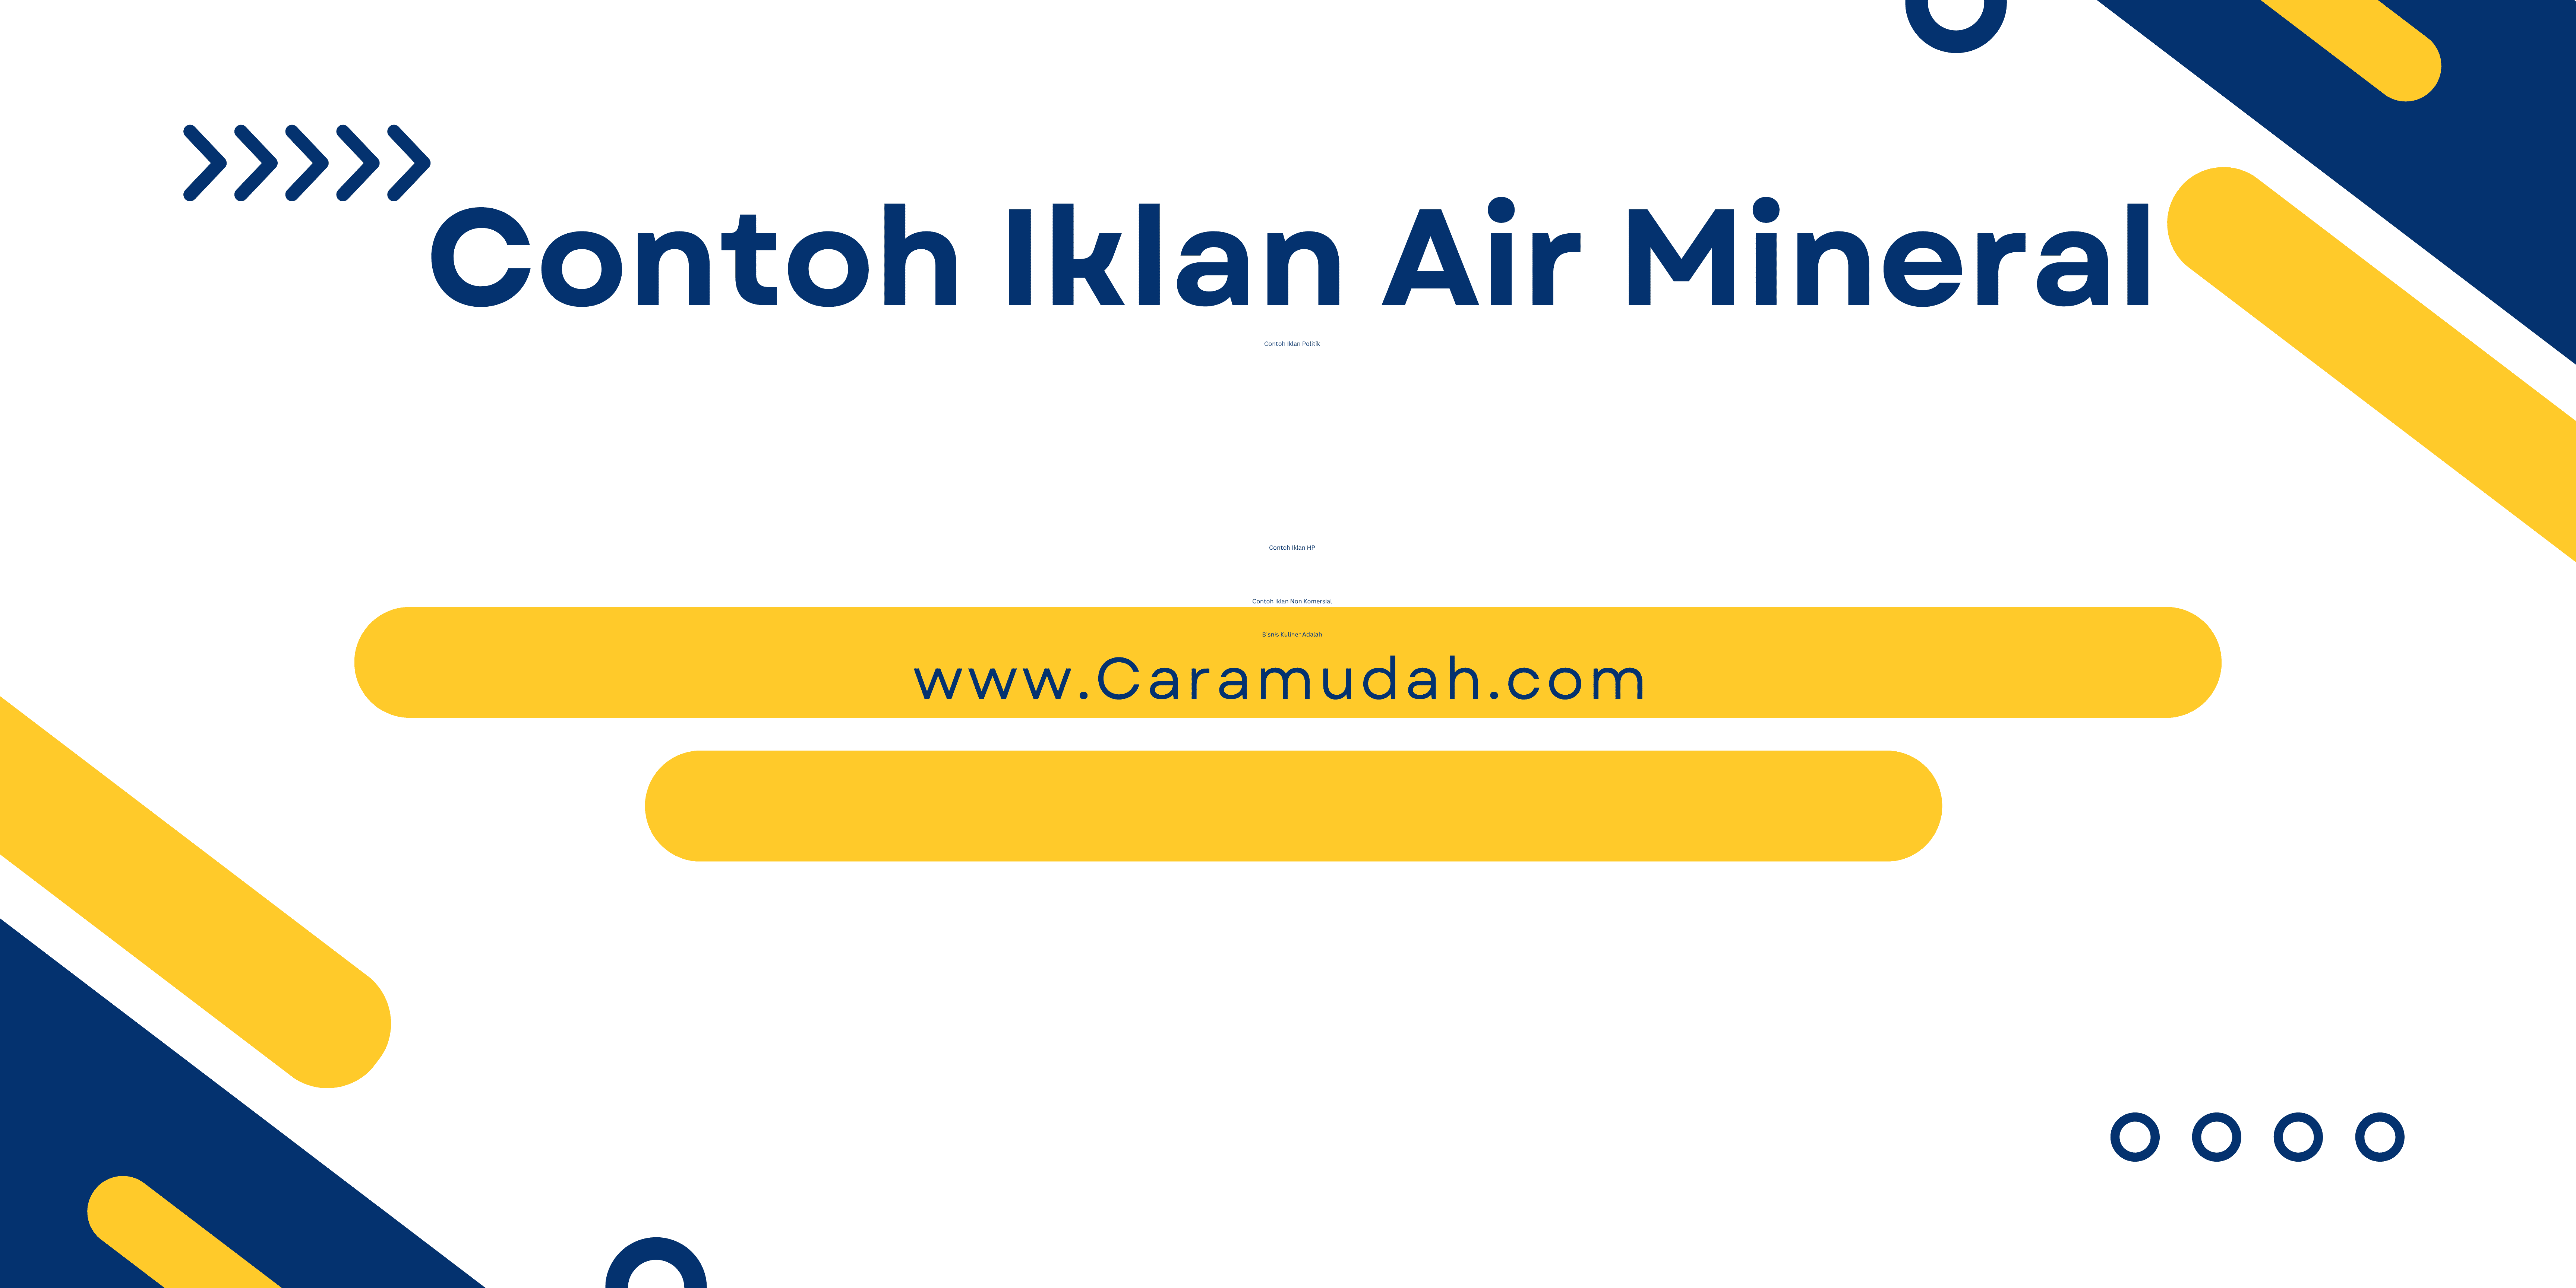 Contoh Iklan Air Mineral